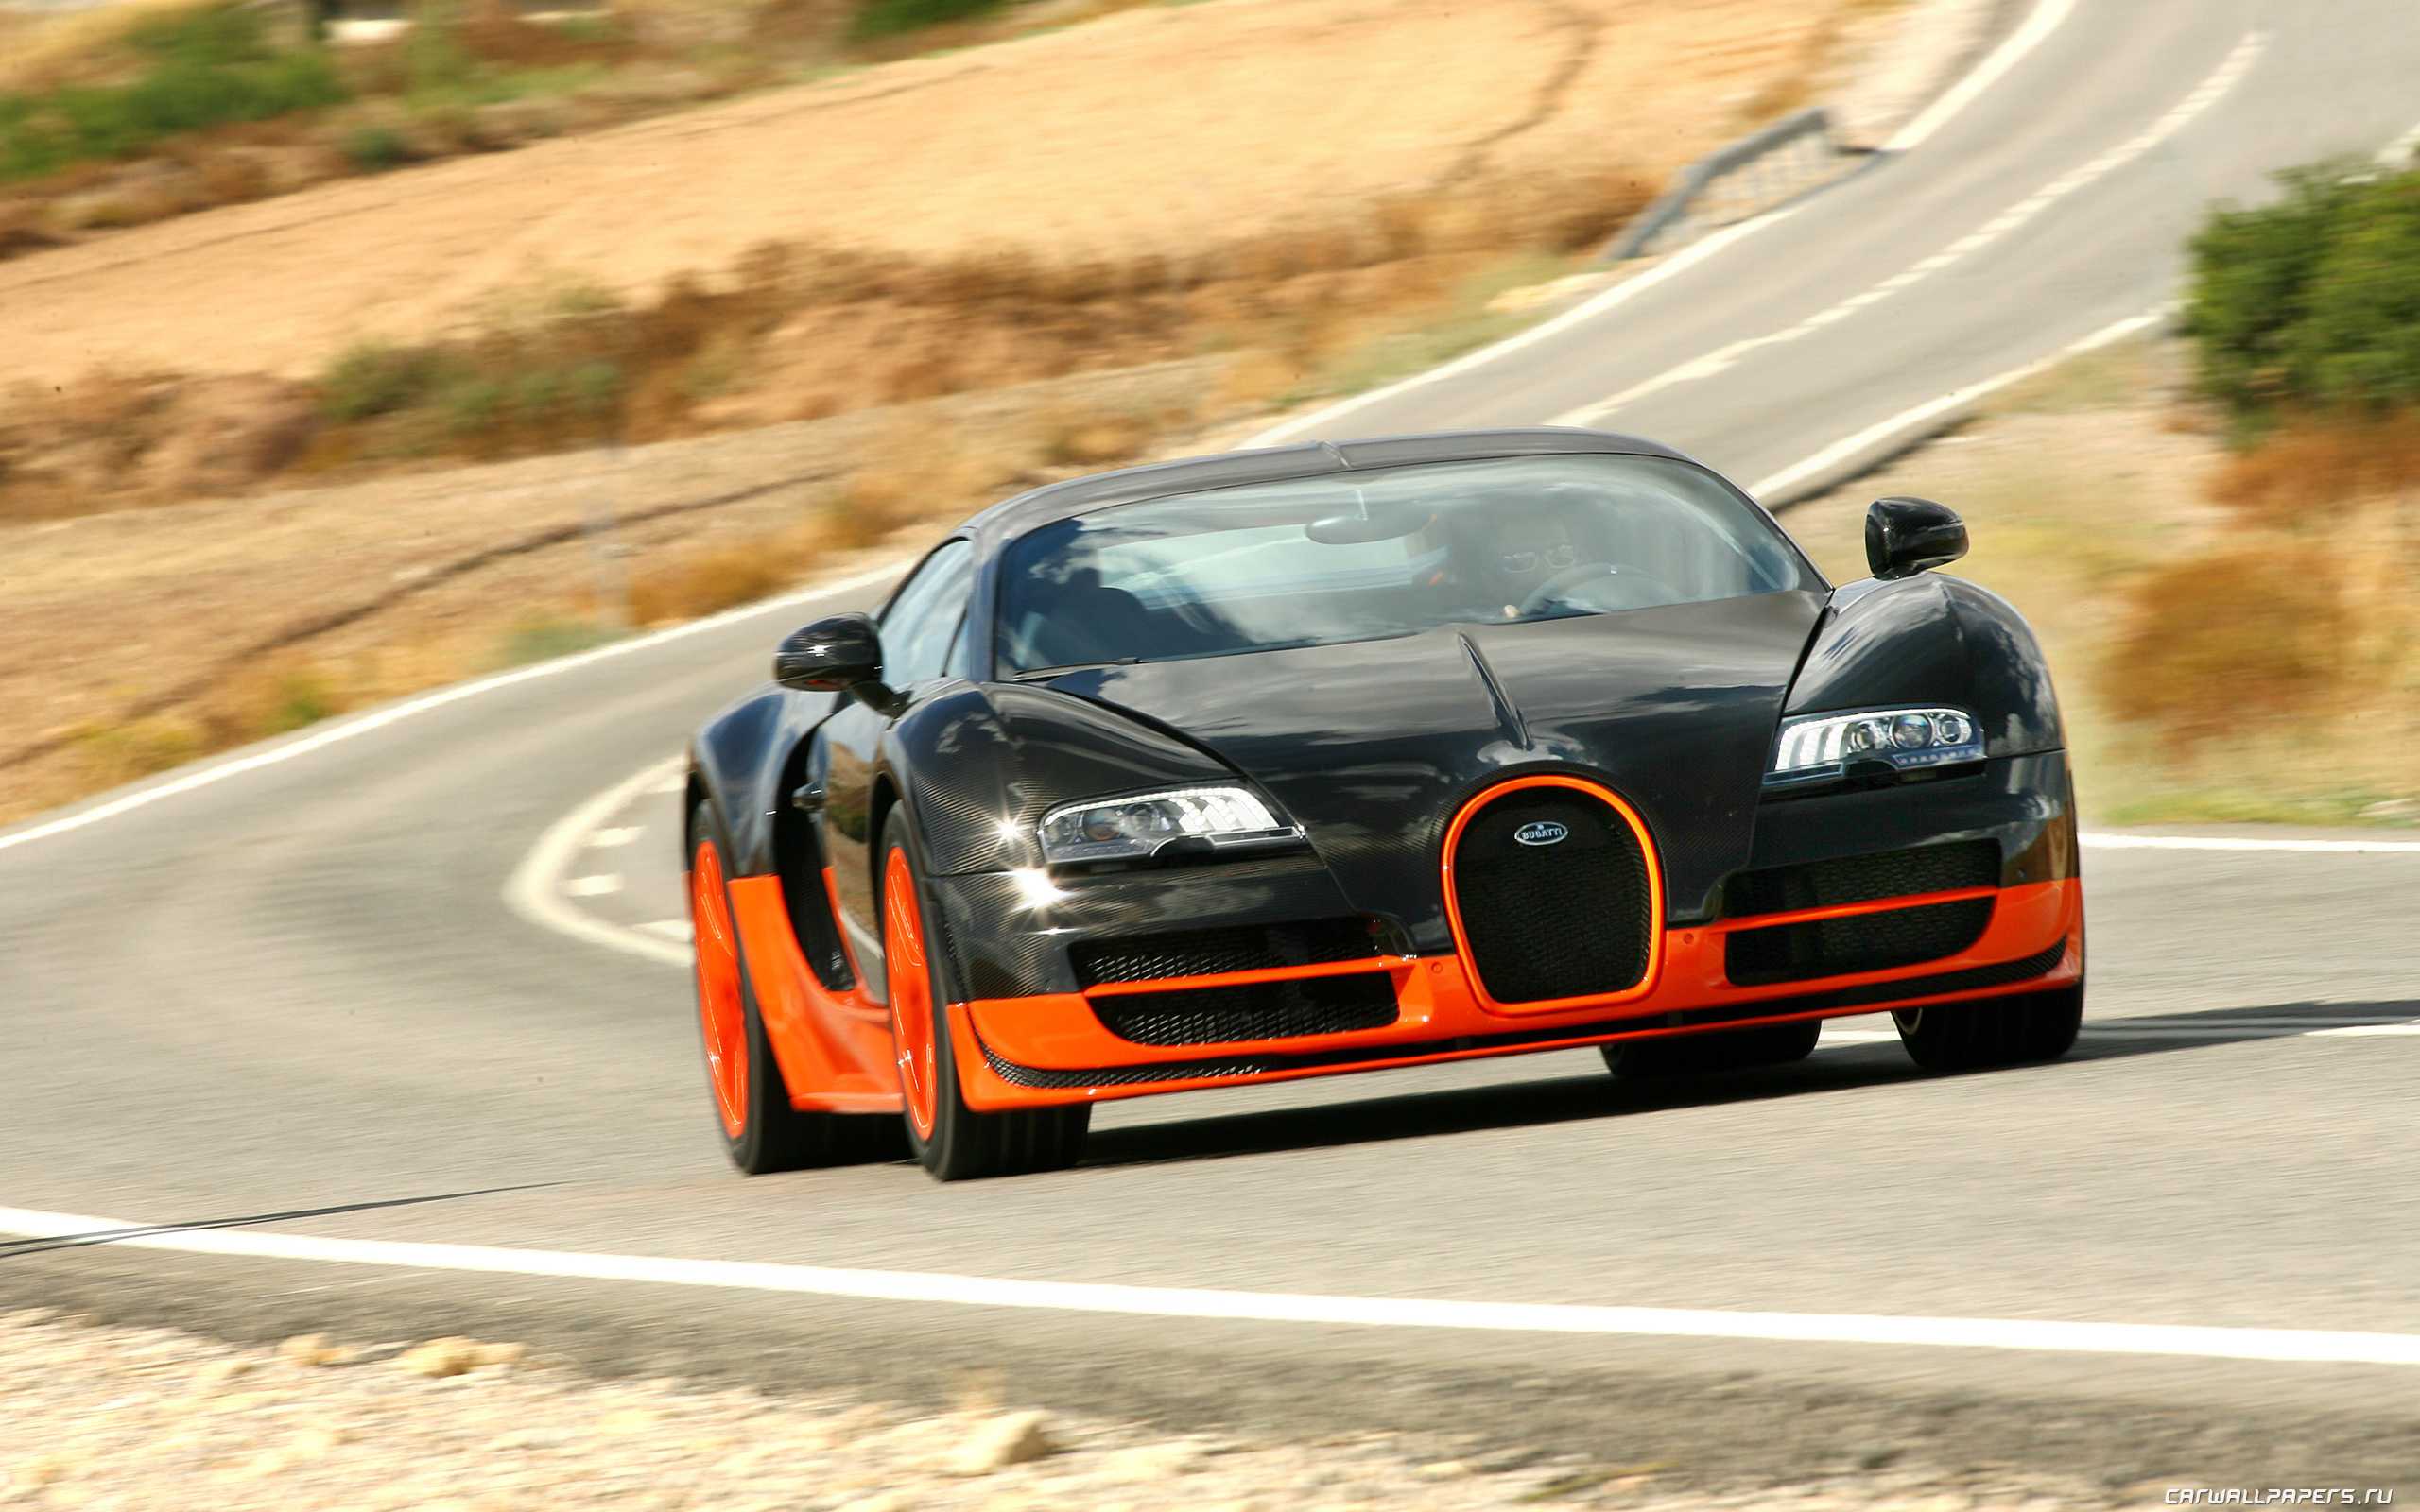 Топ быстрых машин в мире. Машина Bugatti Veyron 16.4 Supersport. Bugatti Veyron 16.4 super Sport 2010. Машина Bugatti Veyron super Sport. Bugatti Veyron 16.4 super Sport Black.